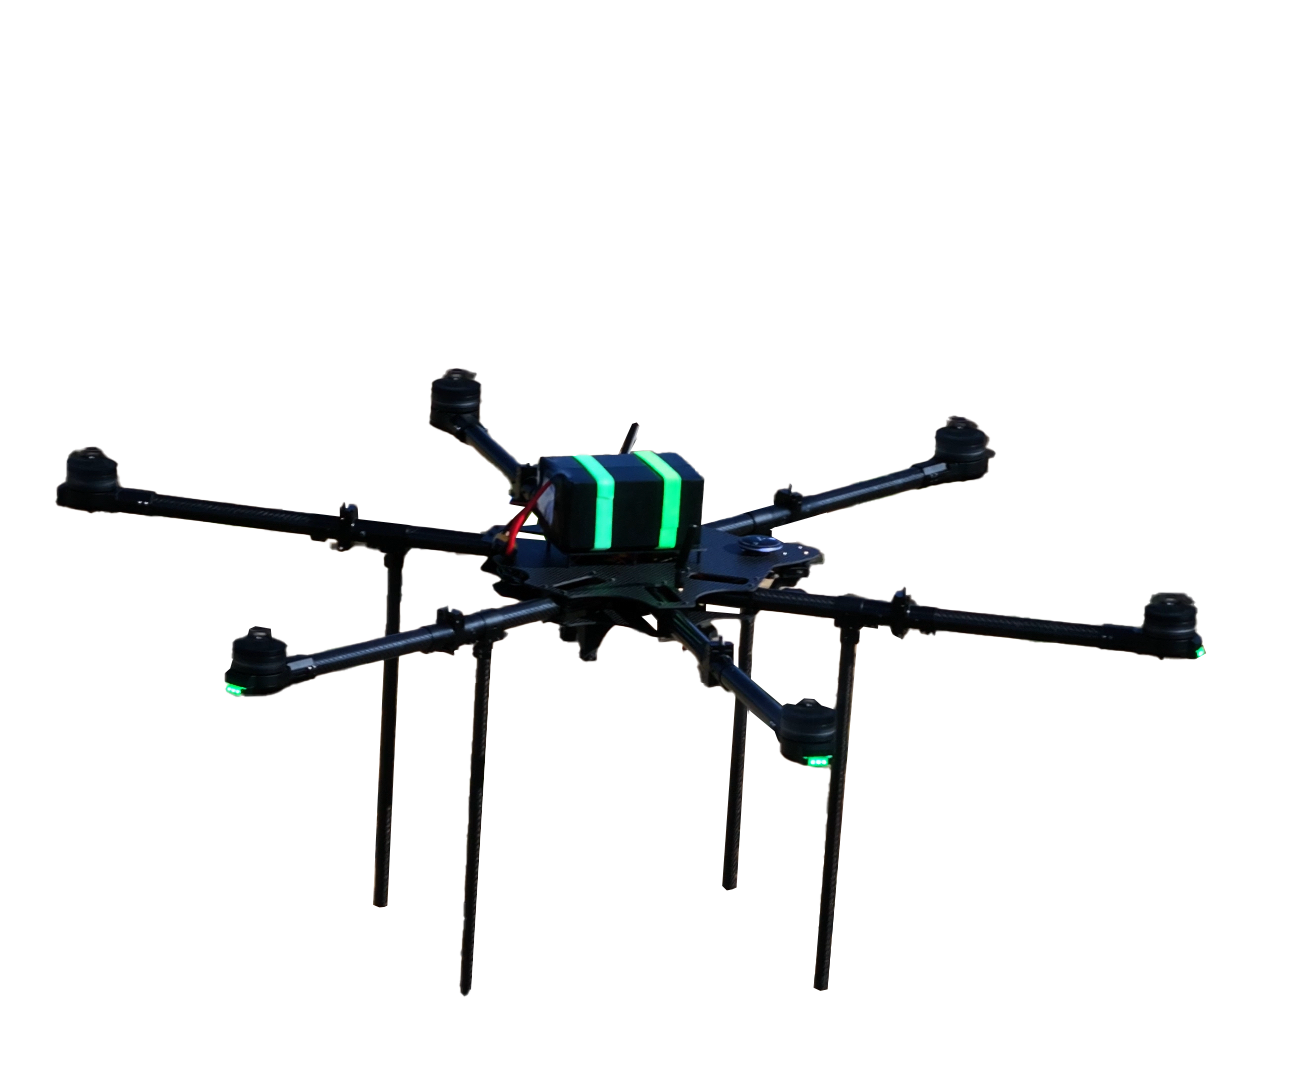 ADROHA drone multi rotors